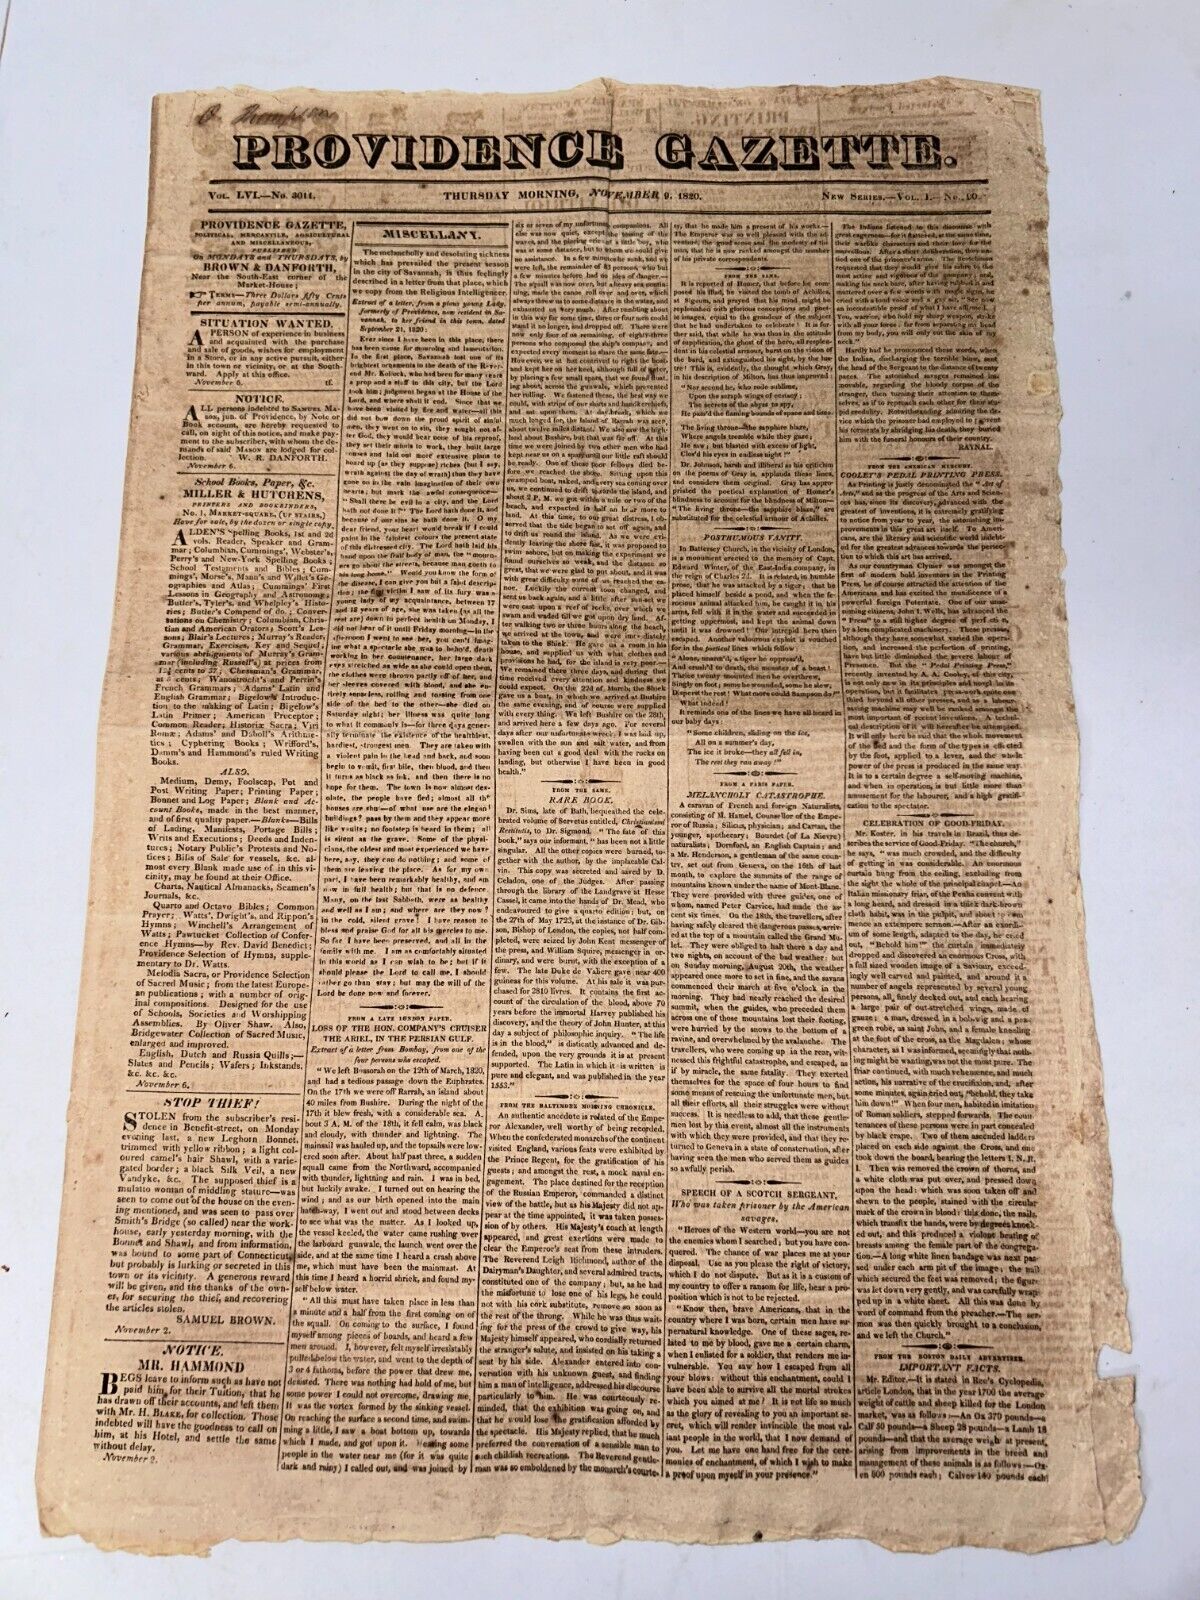 Providence Gazette November 9, 1820 Vol LVI No. 3011 (Vol 1 No. 90) Newspaper